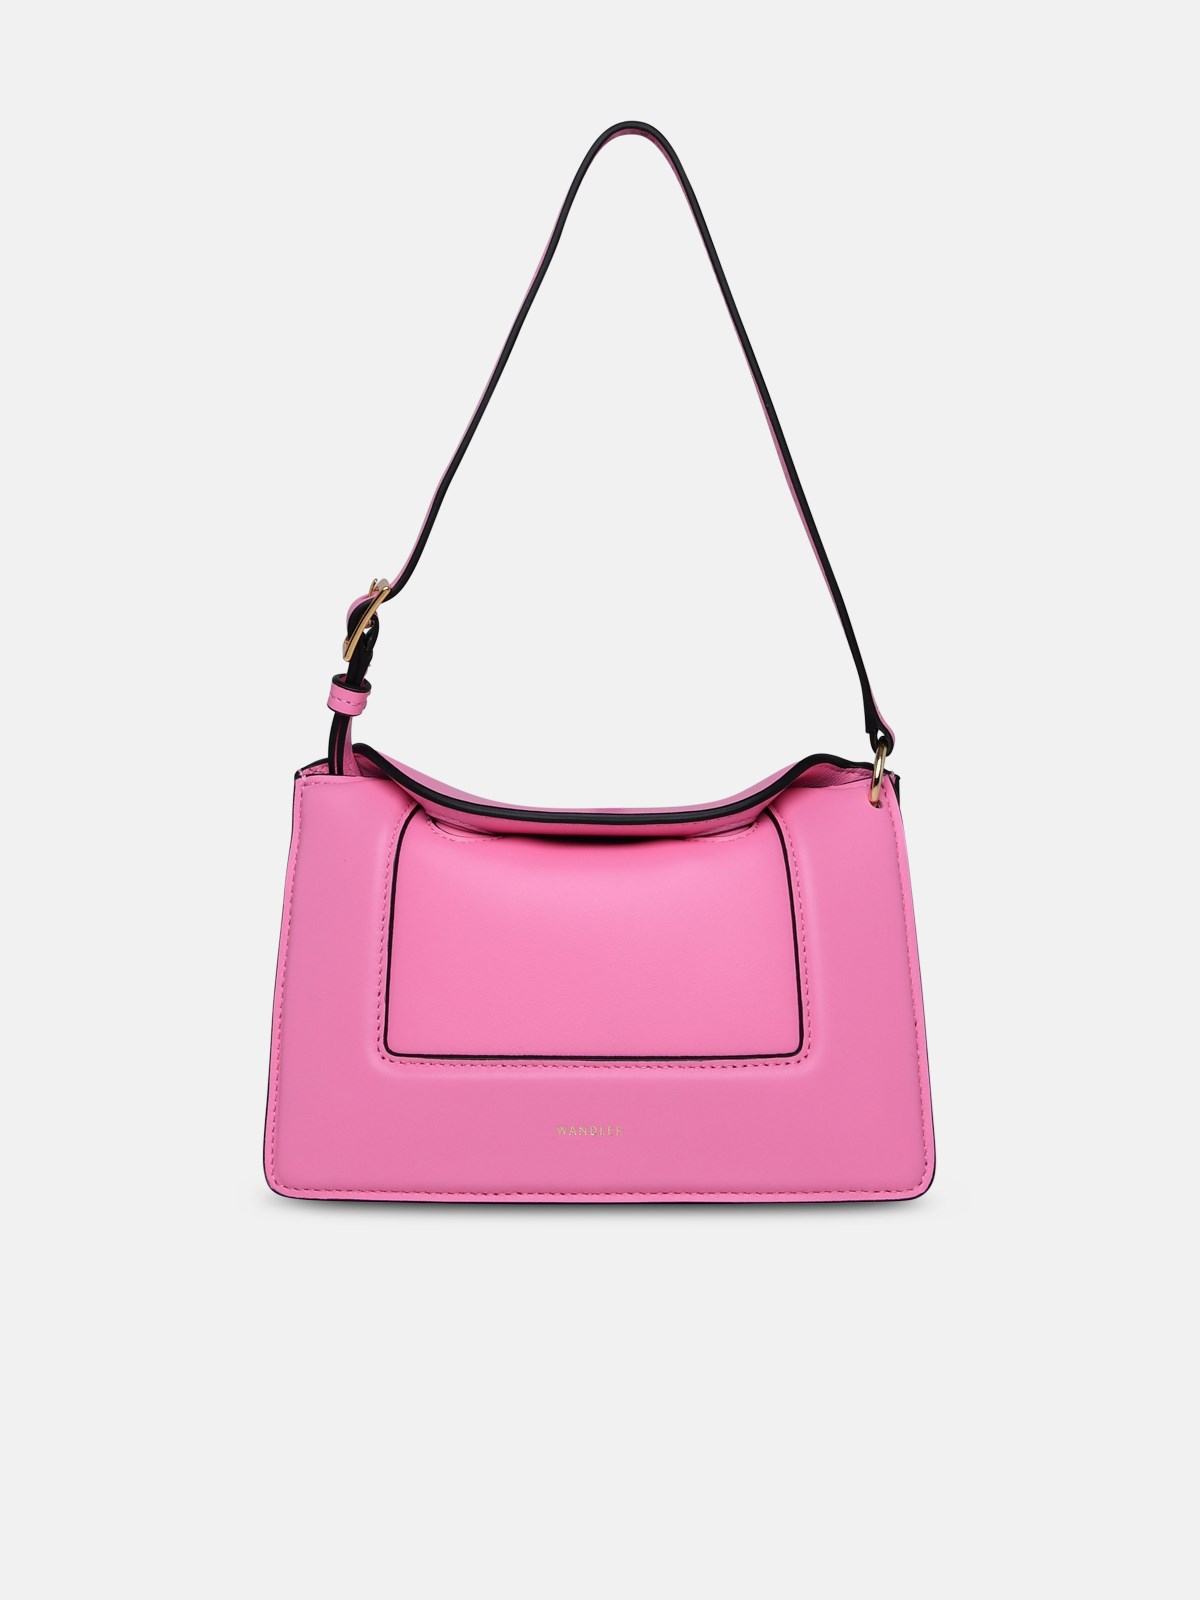 Wandler Penelope Micro Bag In Pink Leather In Fuchsia